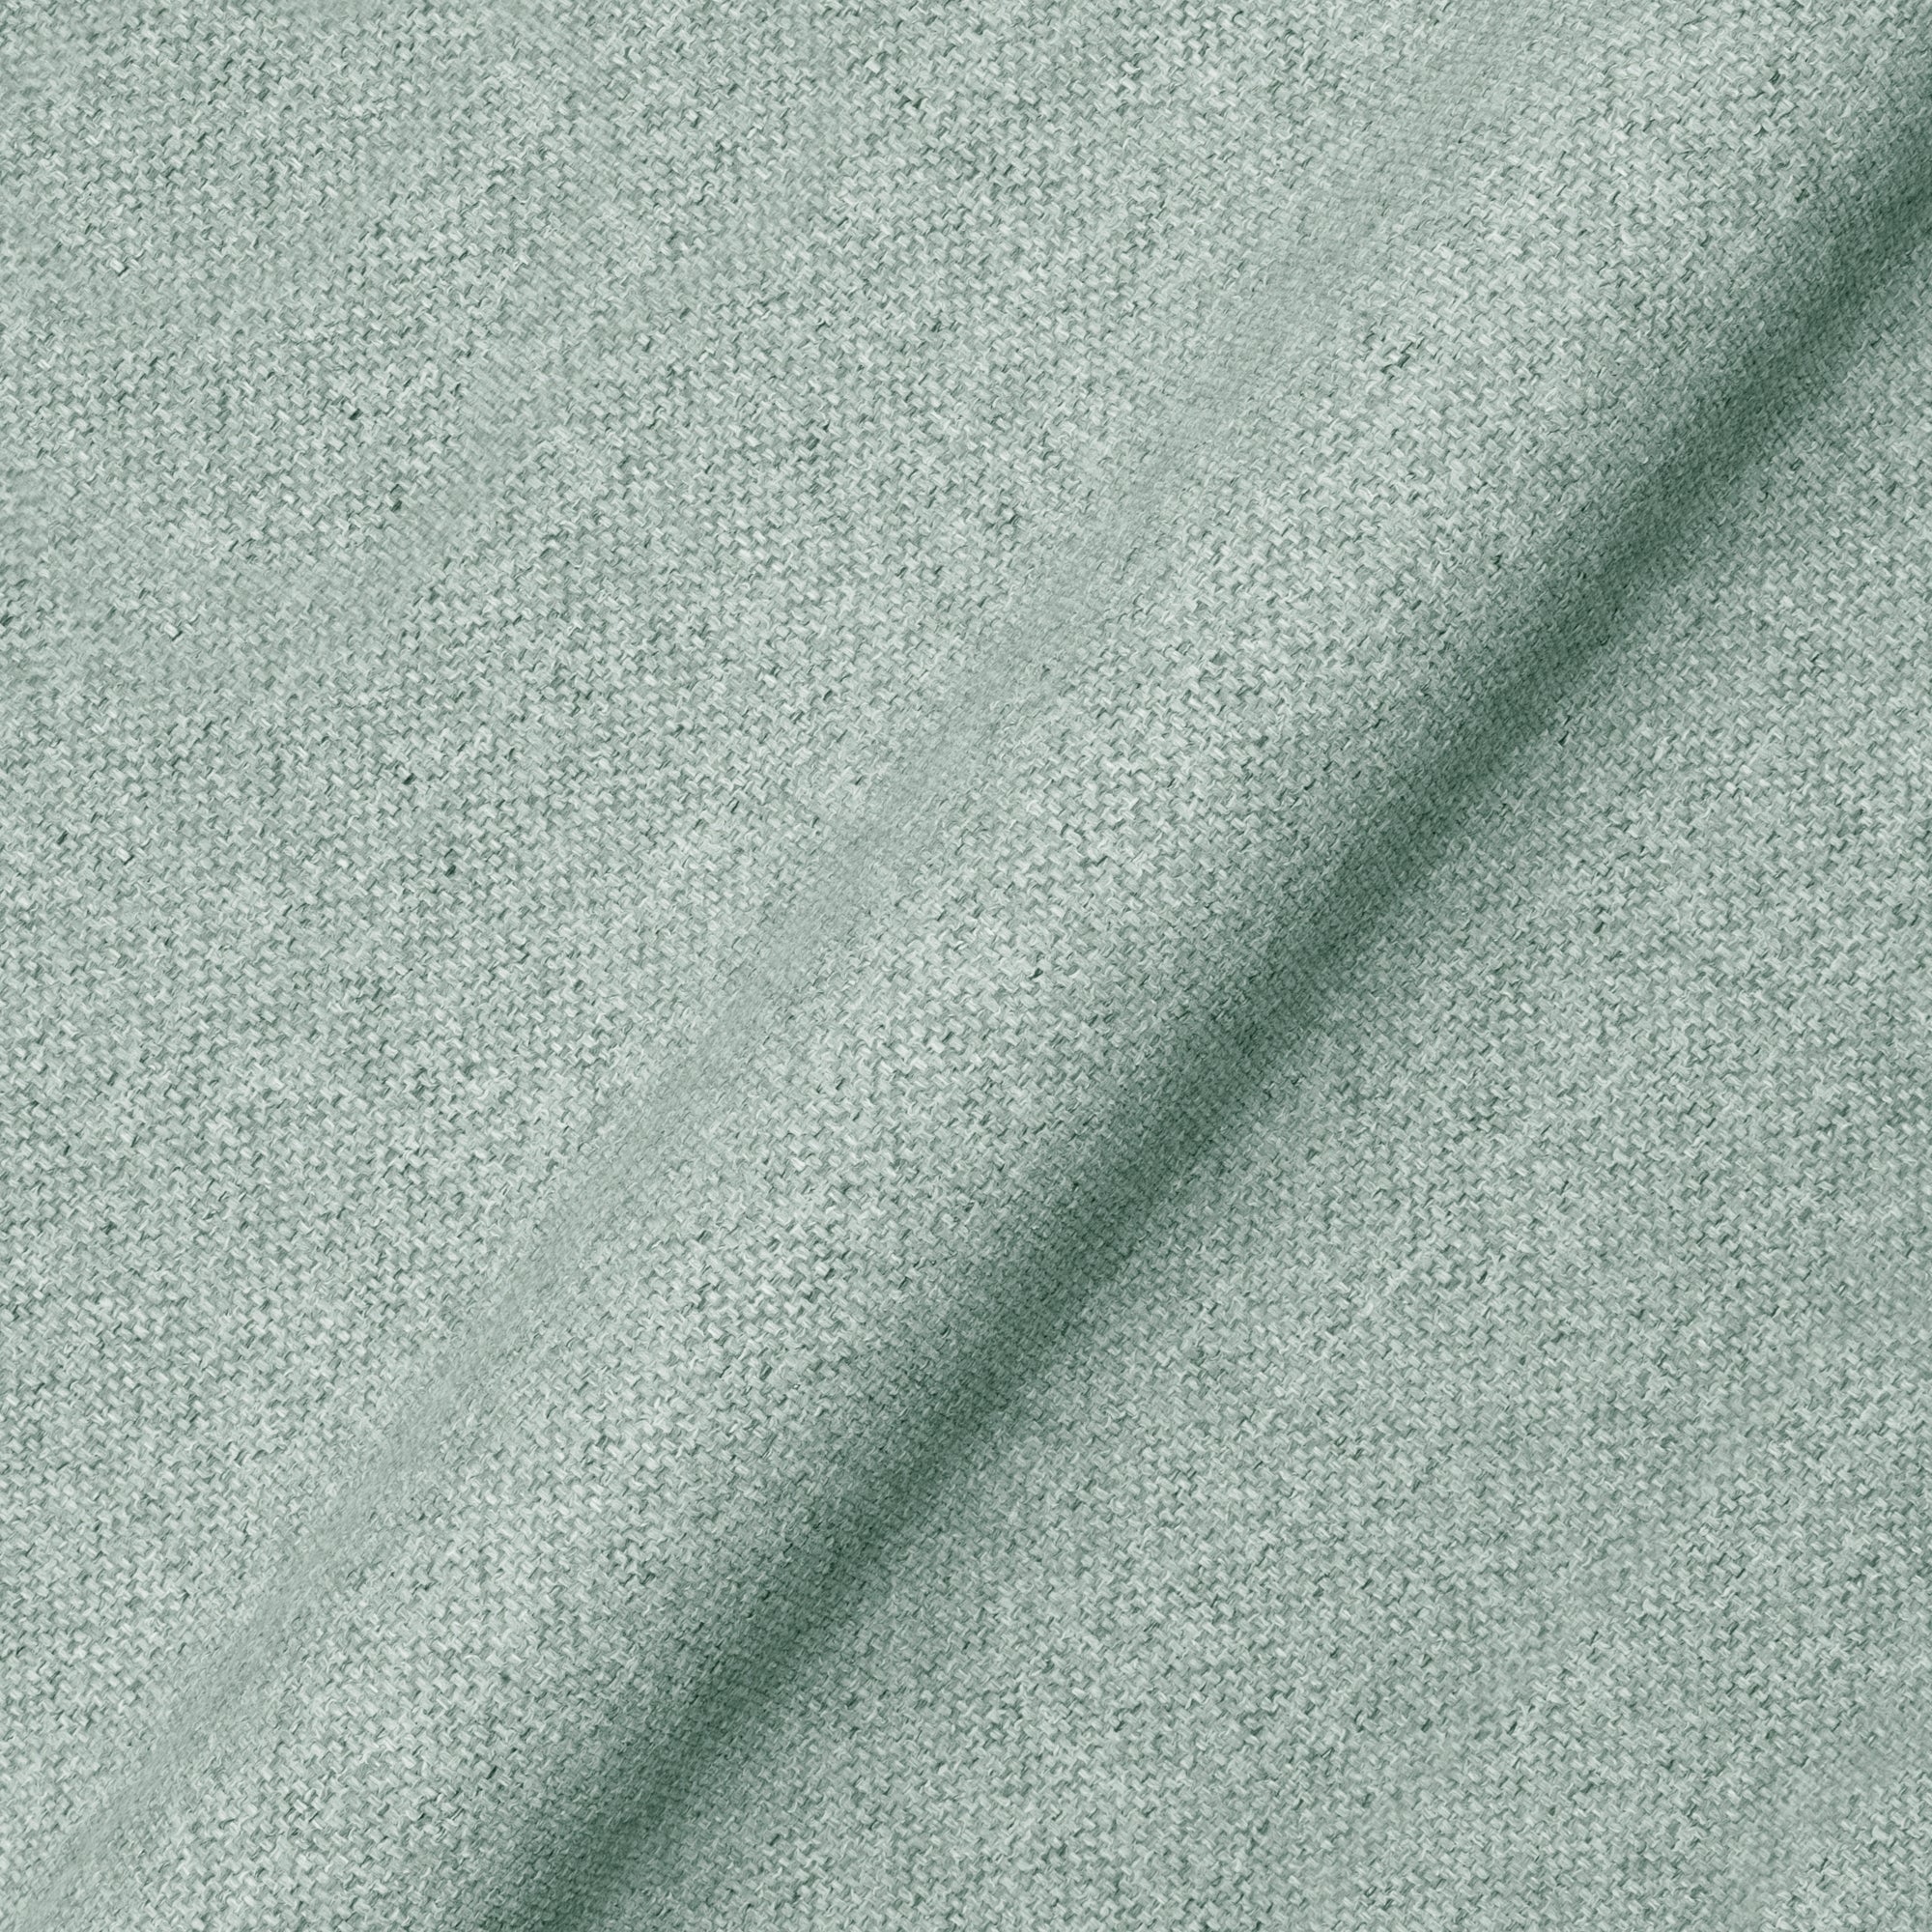 Soft Chenille Fabric Sample